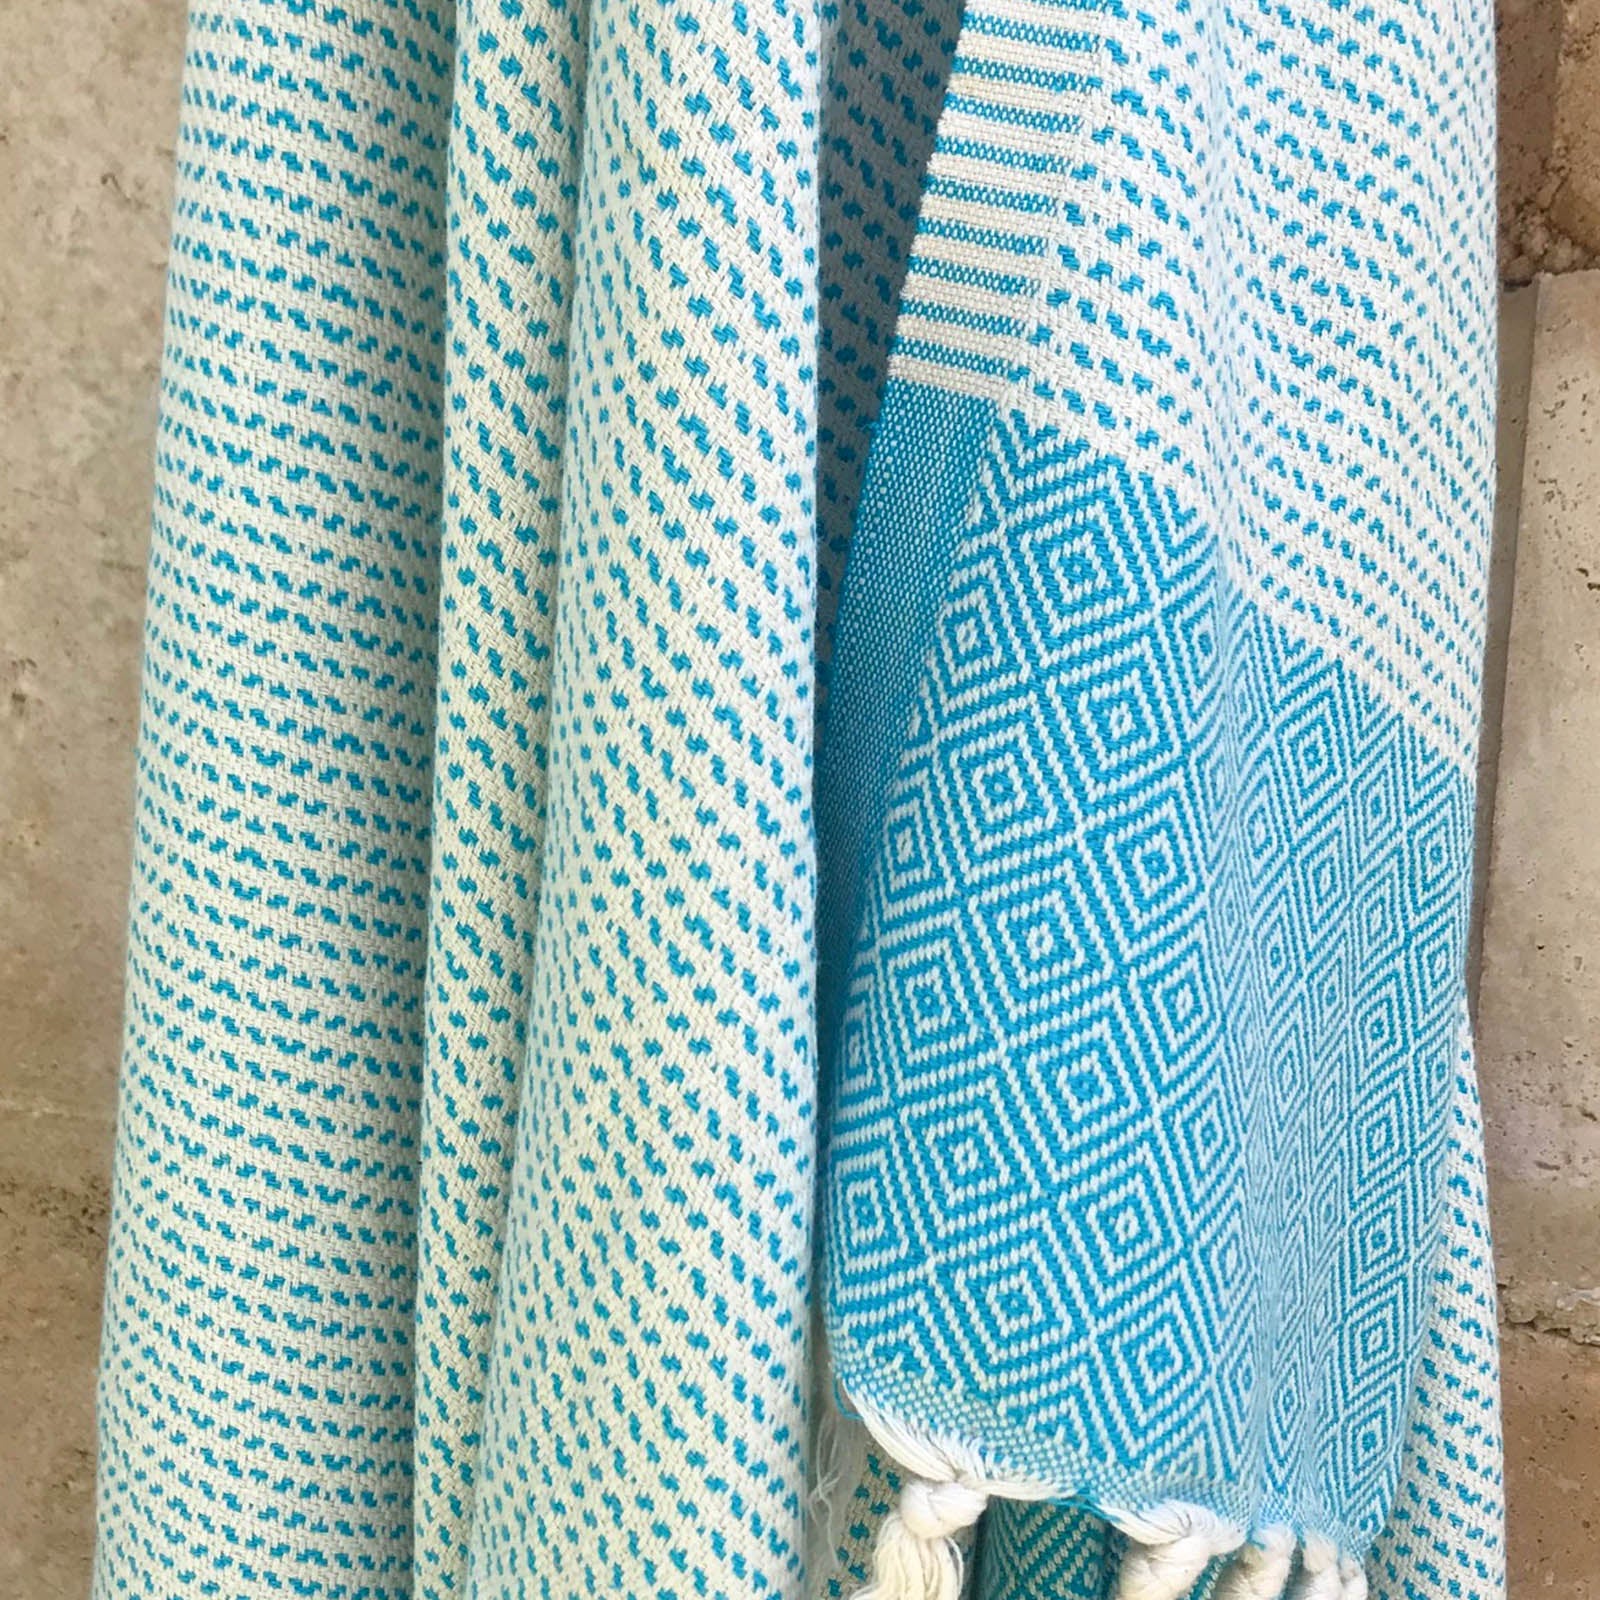 Freostyle Turkish Beach Towel with Pockets, Capri, Aqua Blue, close up of weave hung